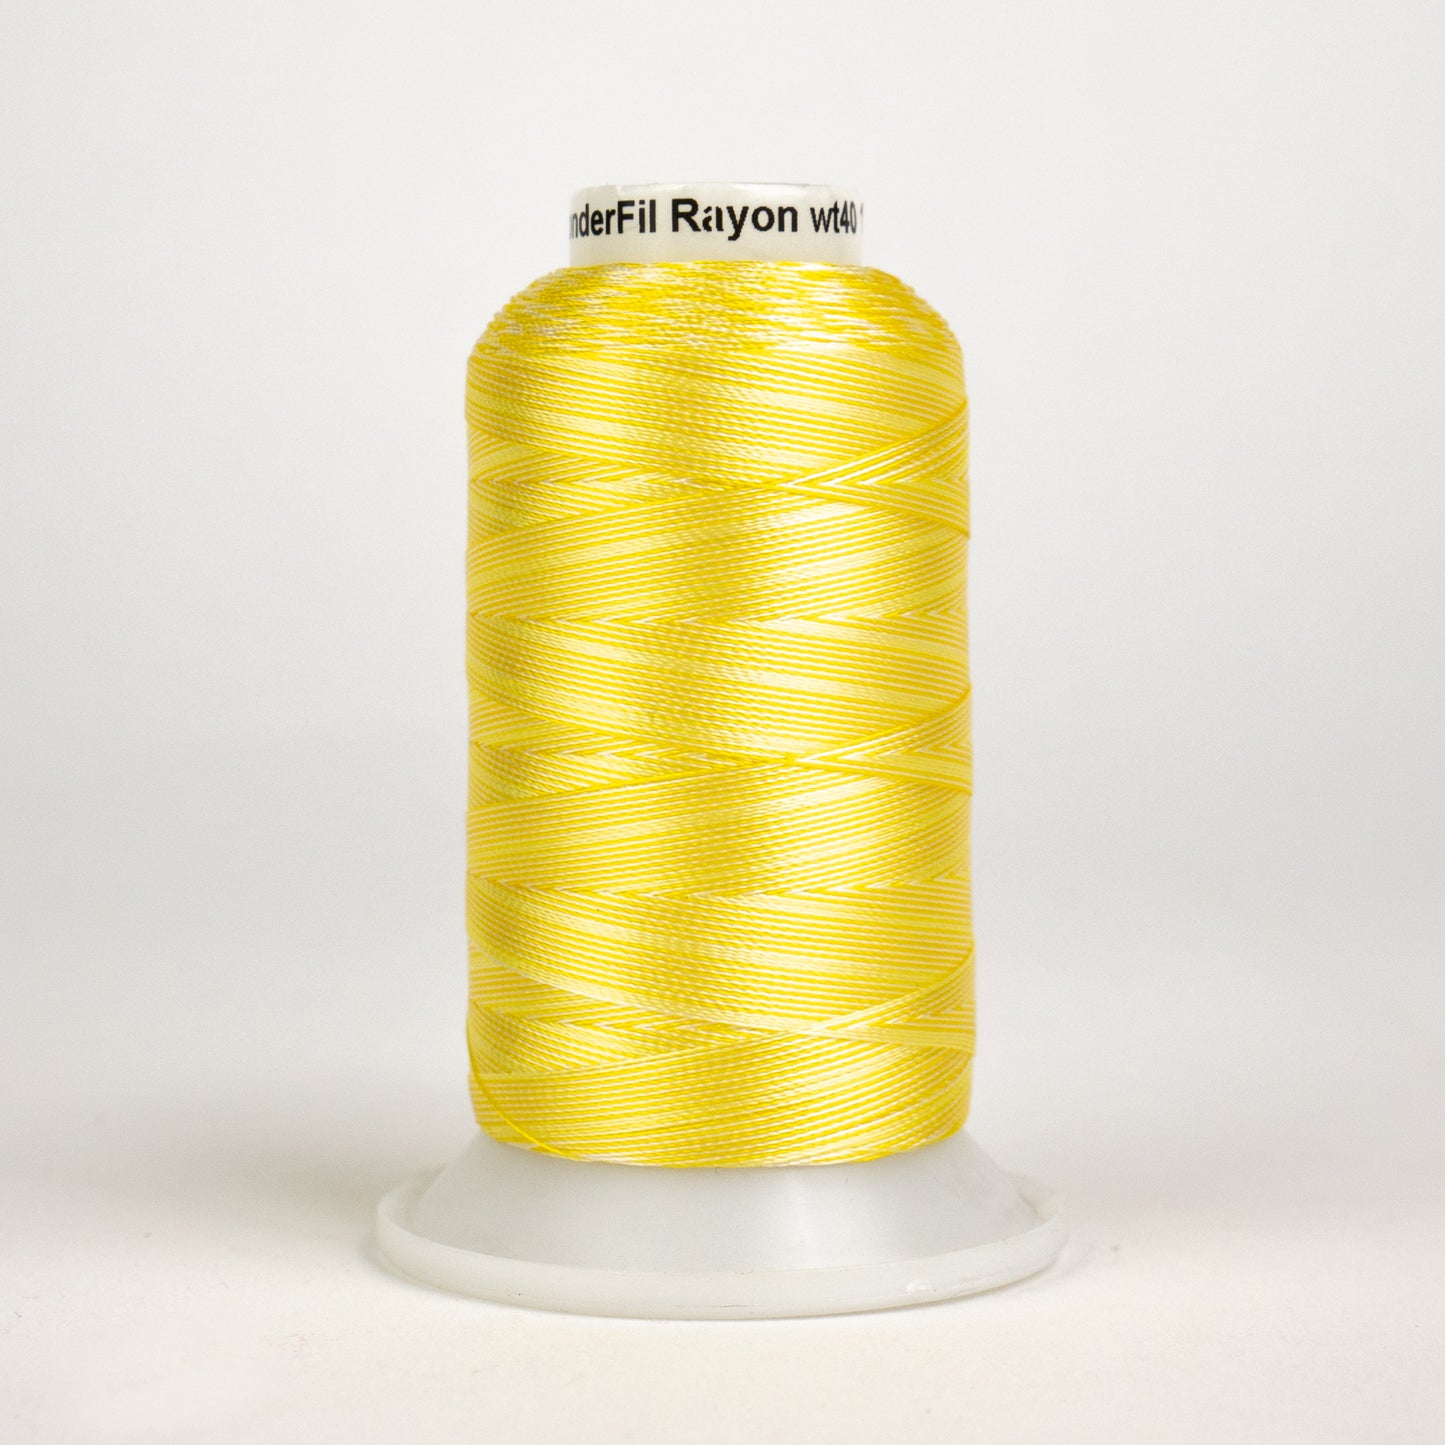 R8205 - Splendor‚Ñ¢ 40wt Rayon Yellow Thread WonderFil